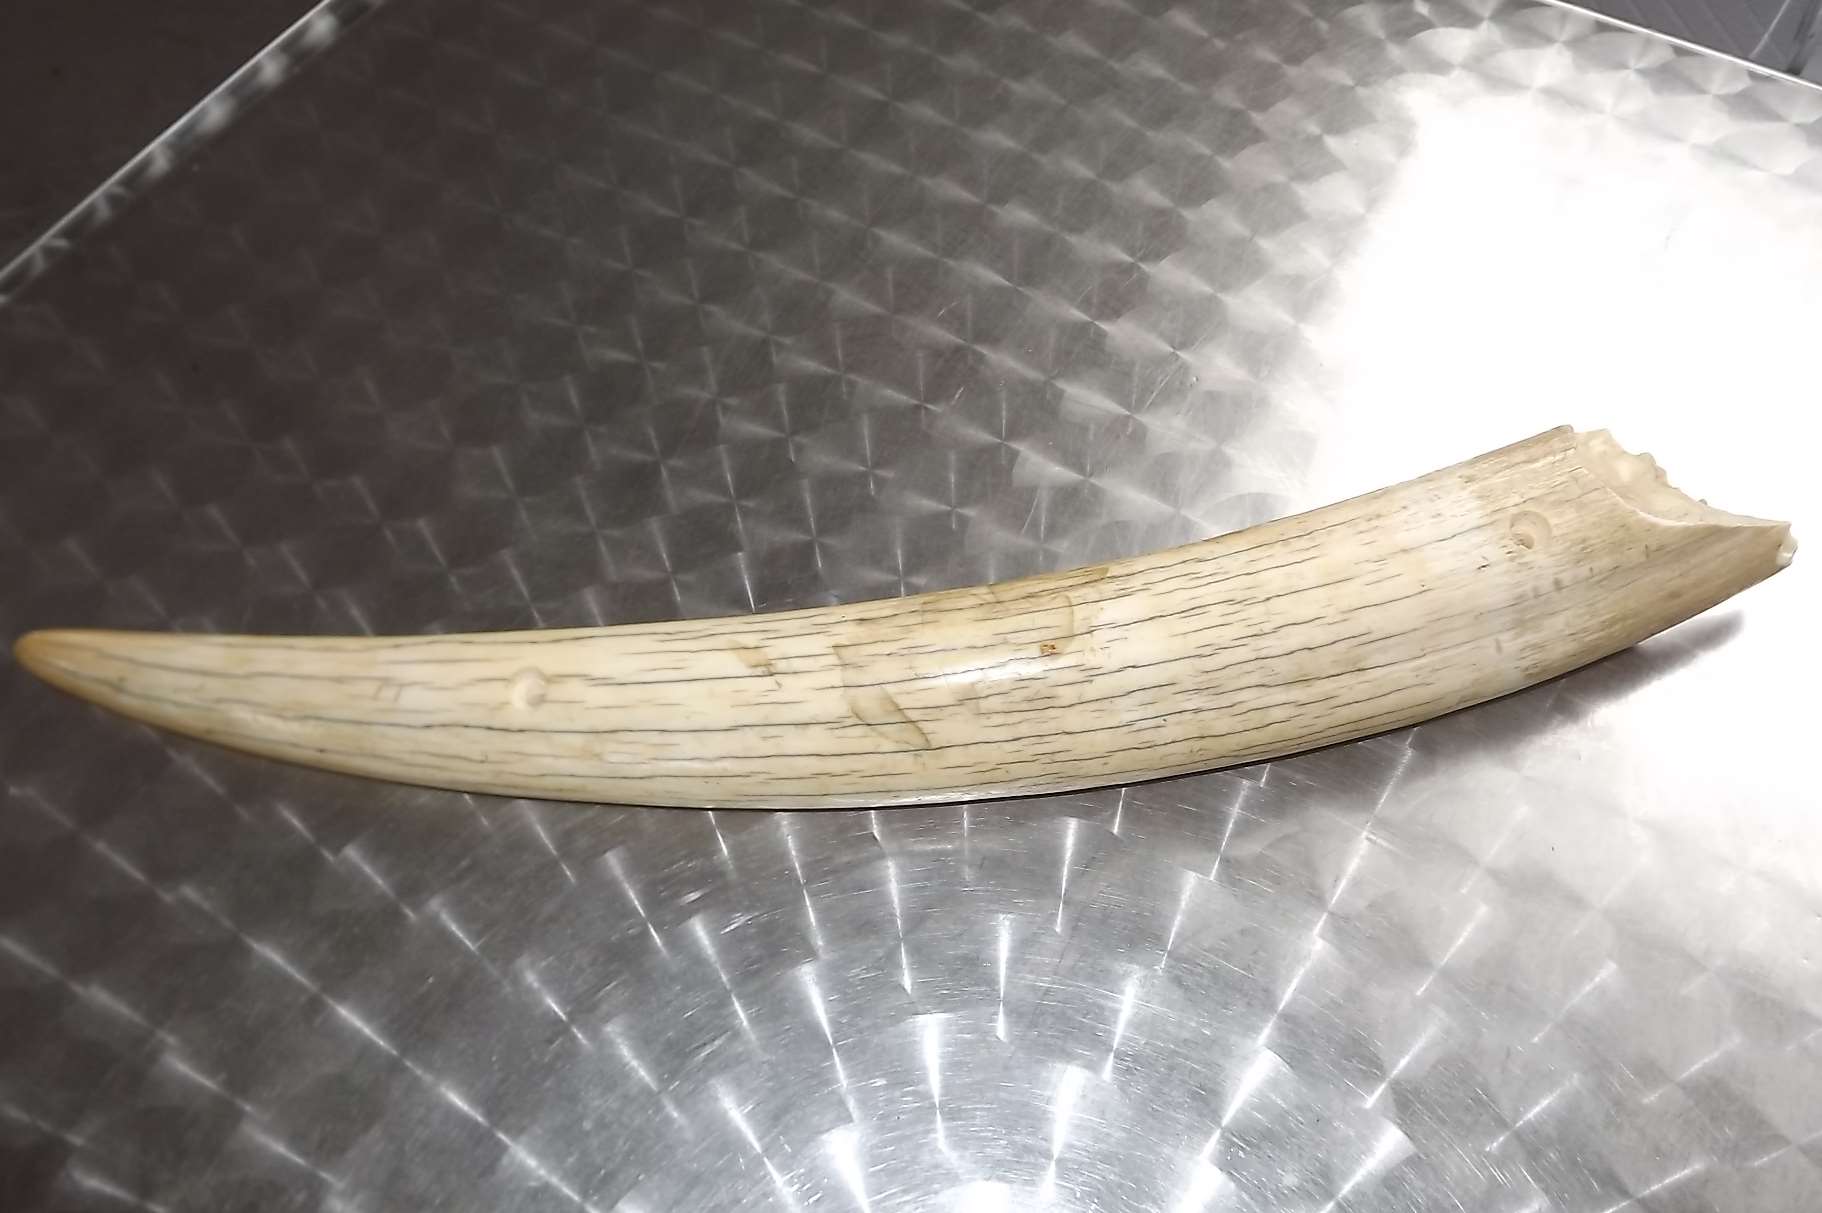 An elephant tusk stolen from Wingham Wildlife Park